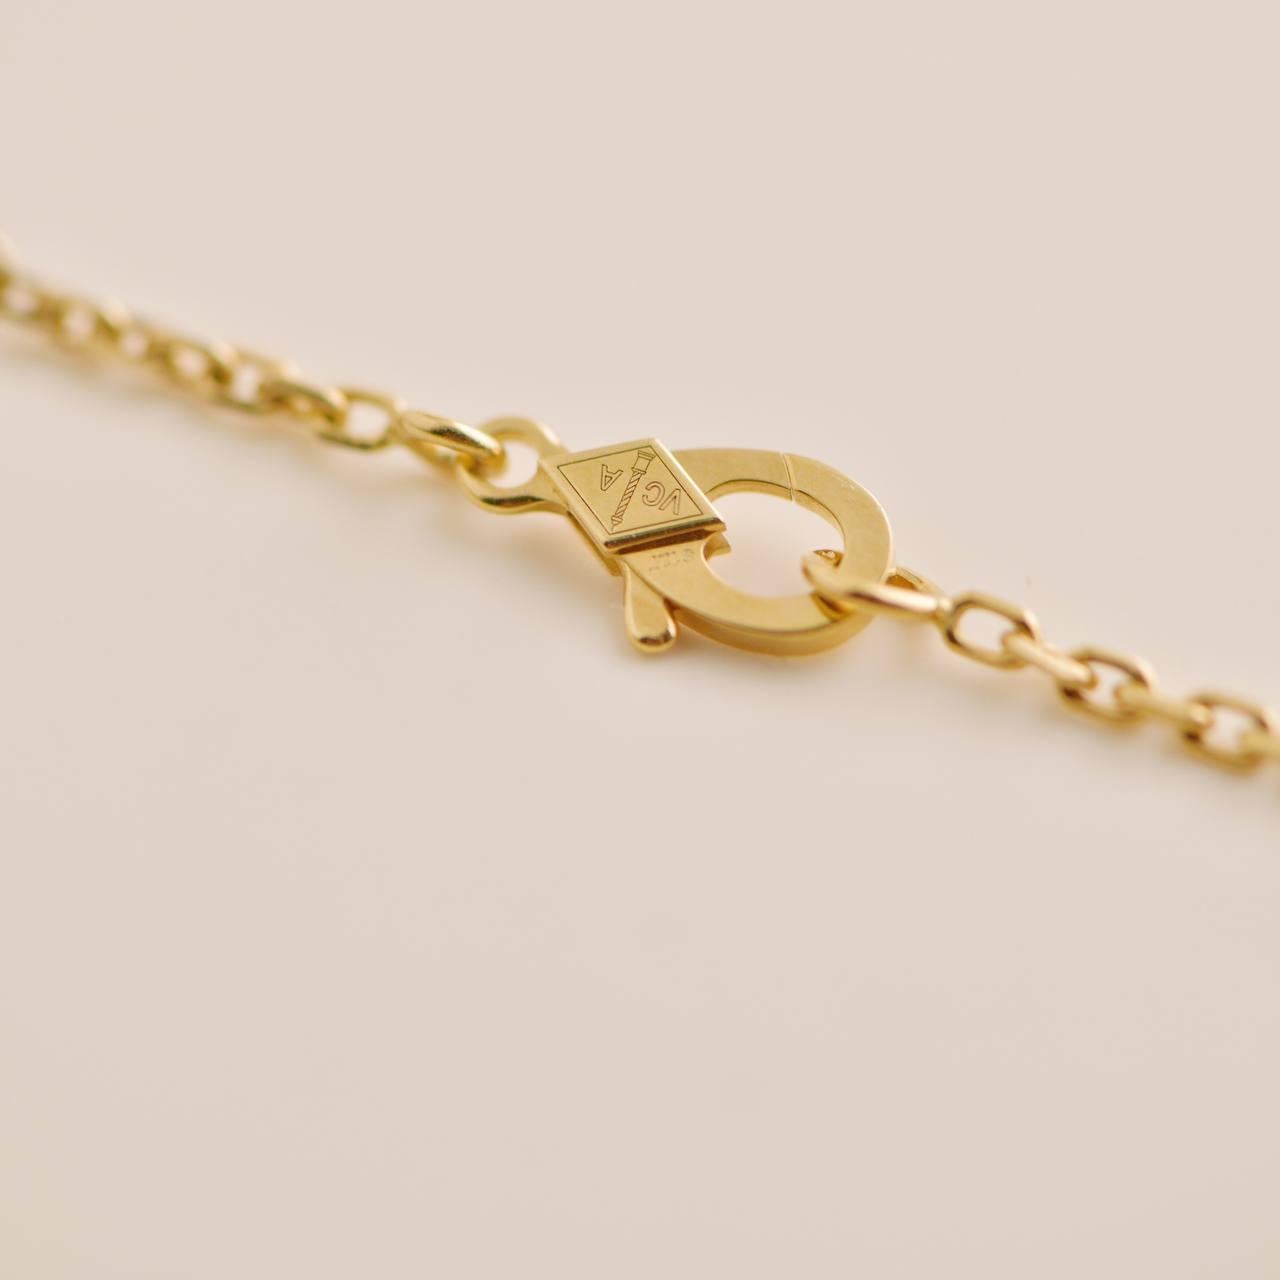 Van Cleef & Arpels Zodiaque Medal Geminorum Yellow Gold Pendant Necklace For Sale 6